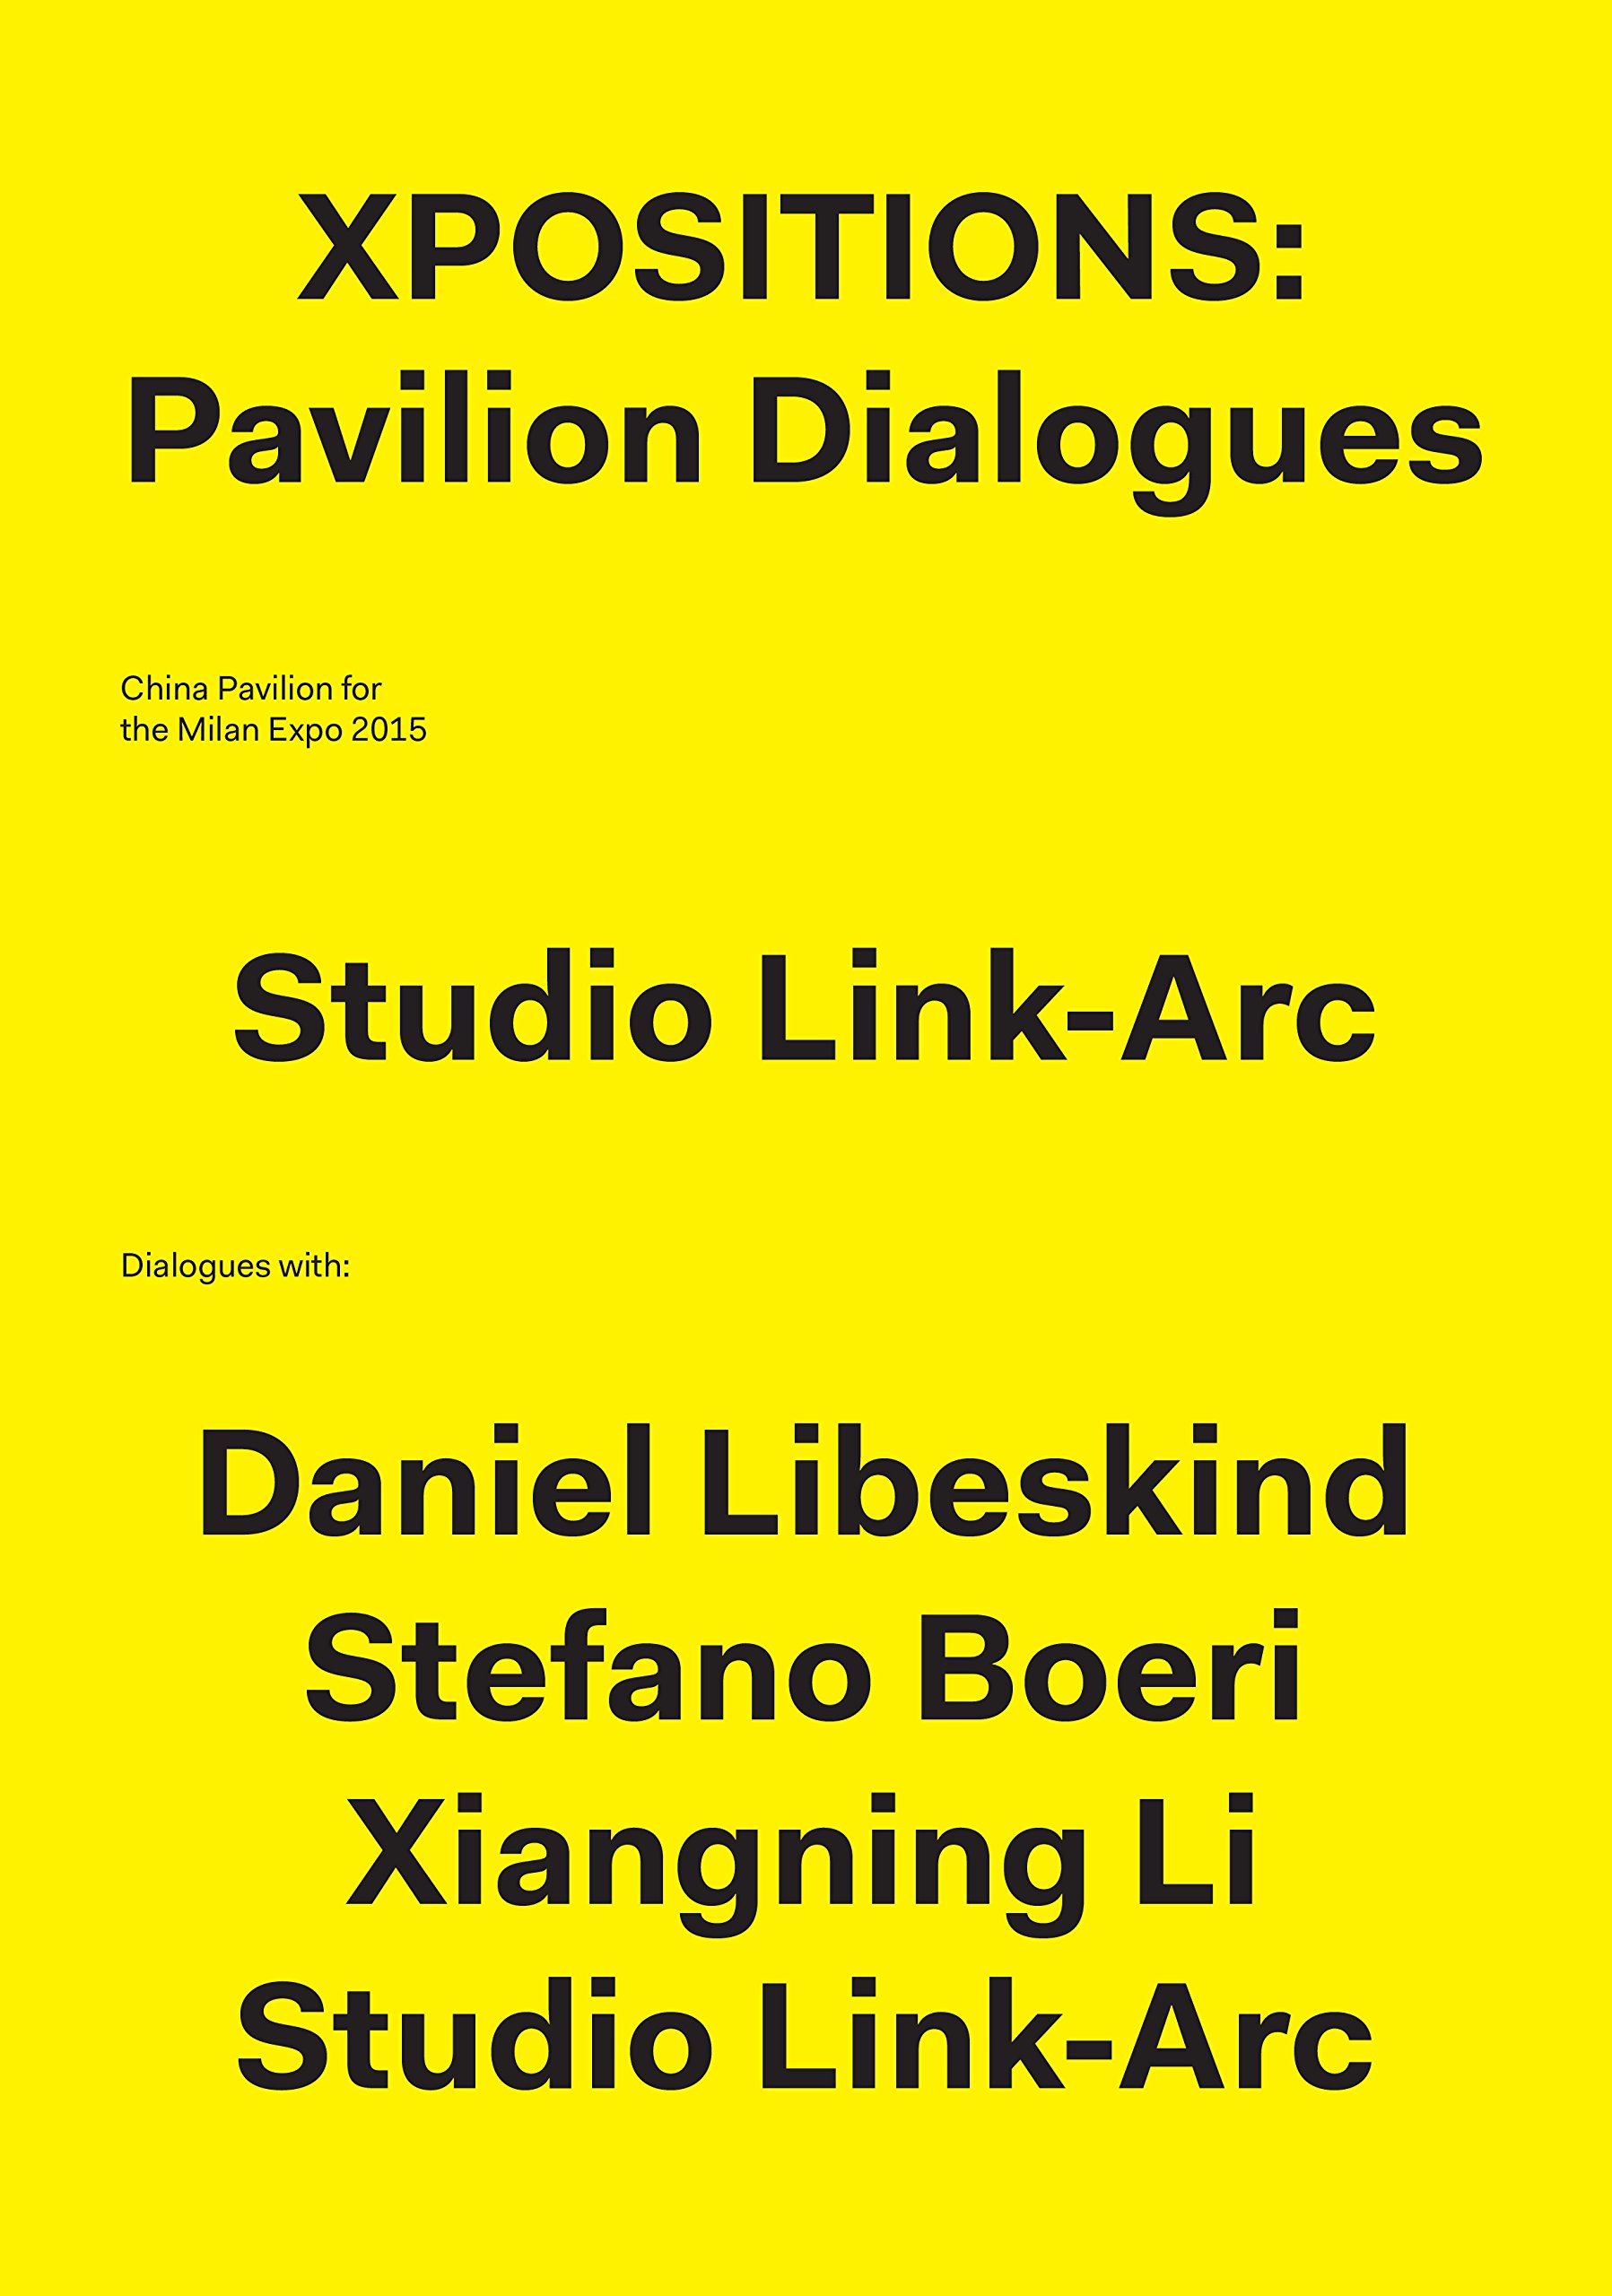 Xpositions: The Pavilion Dialogues